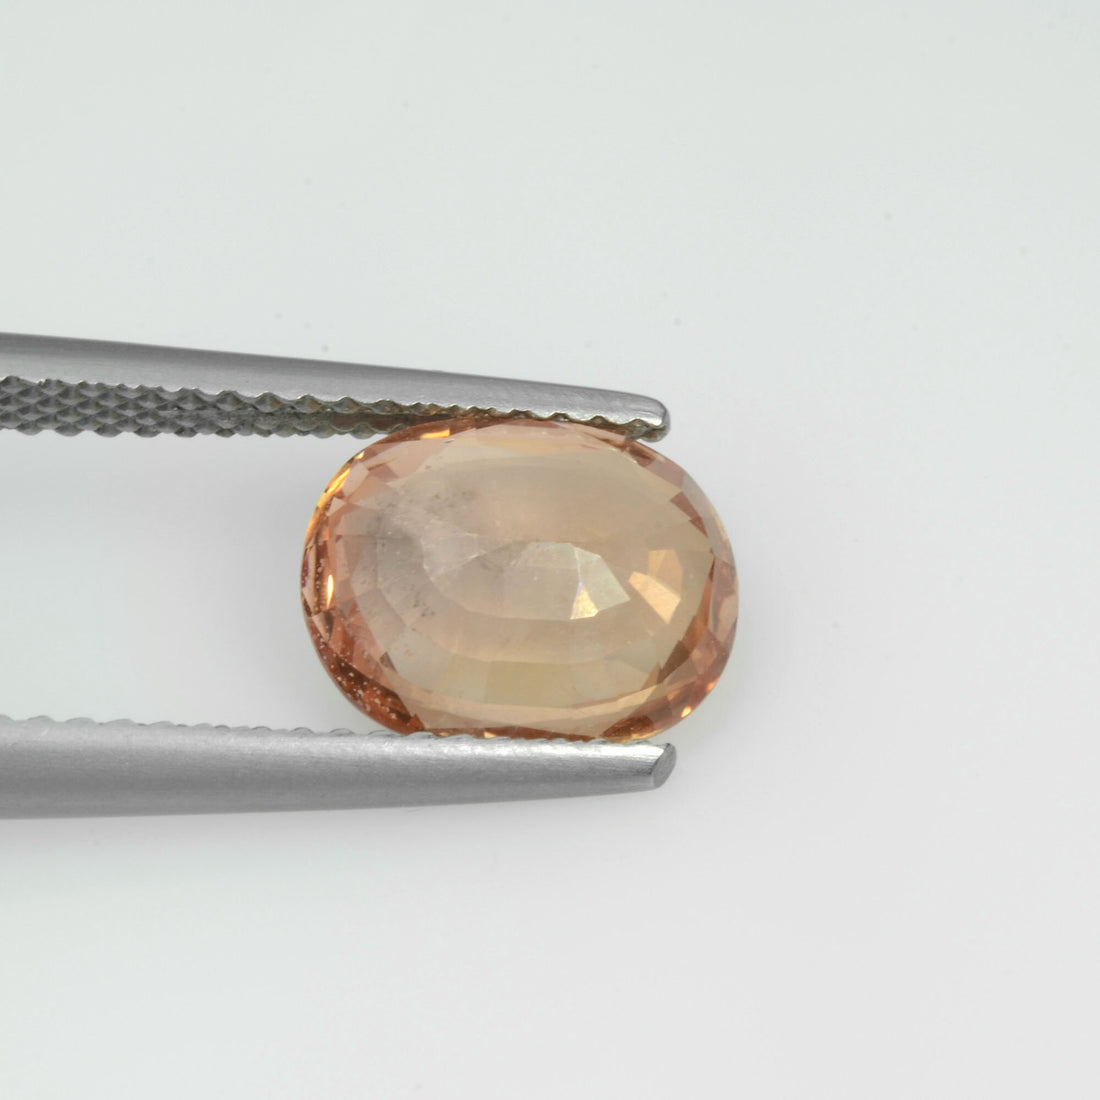 2.87 cts Natural Peach Sapphire Loose Gemstone Oval Cut